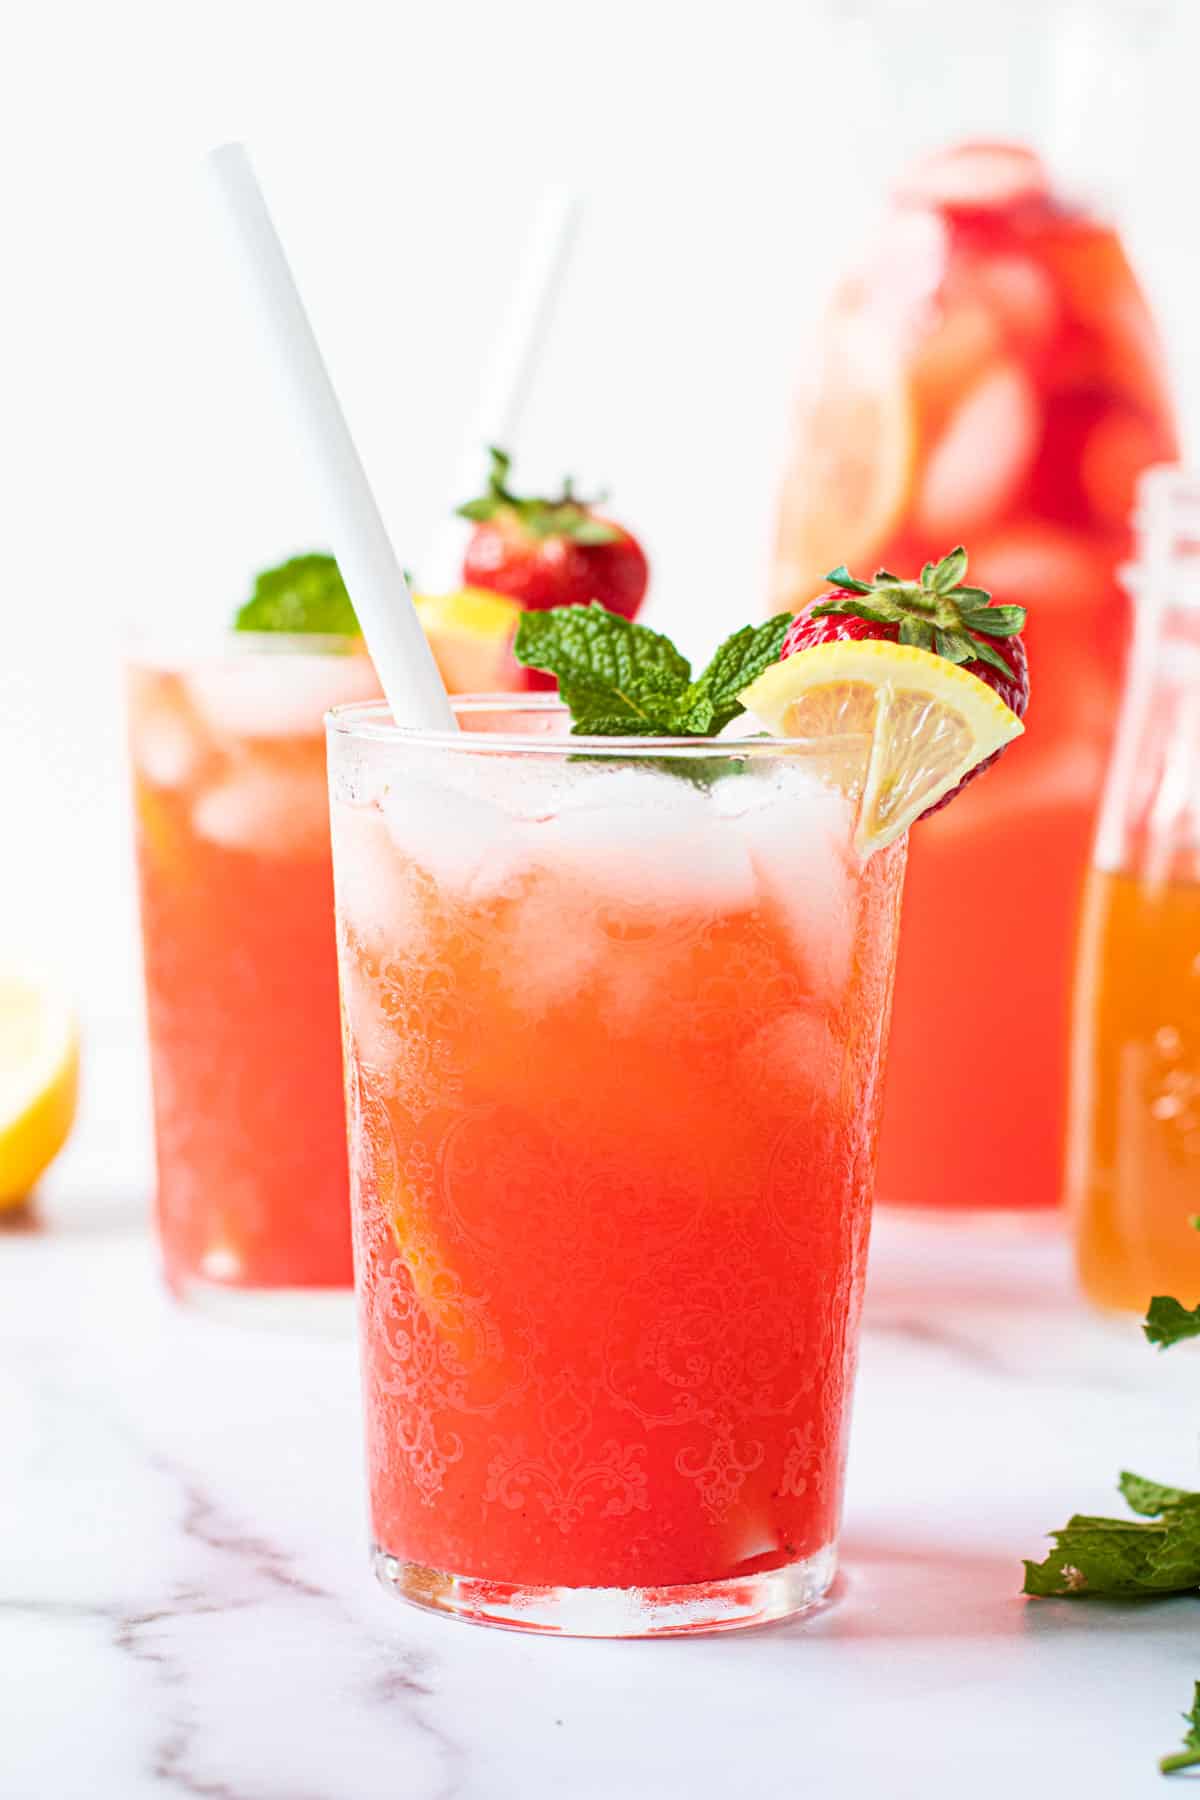 Strawberry Lemonade with Mint